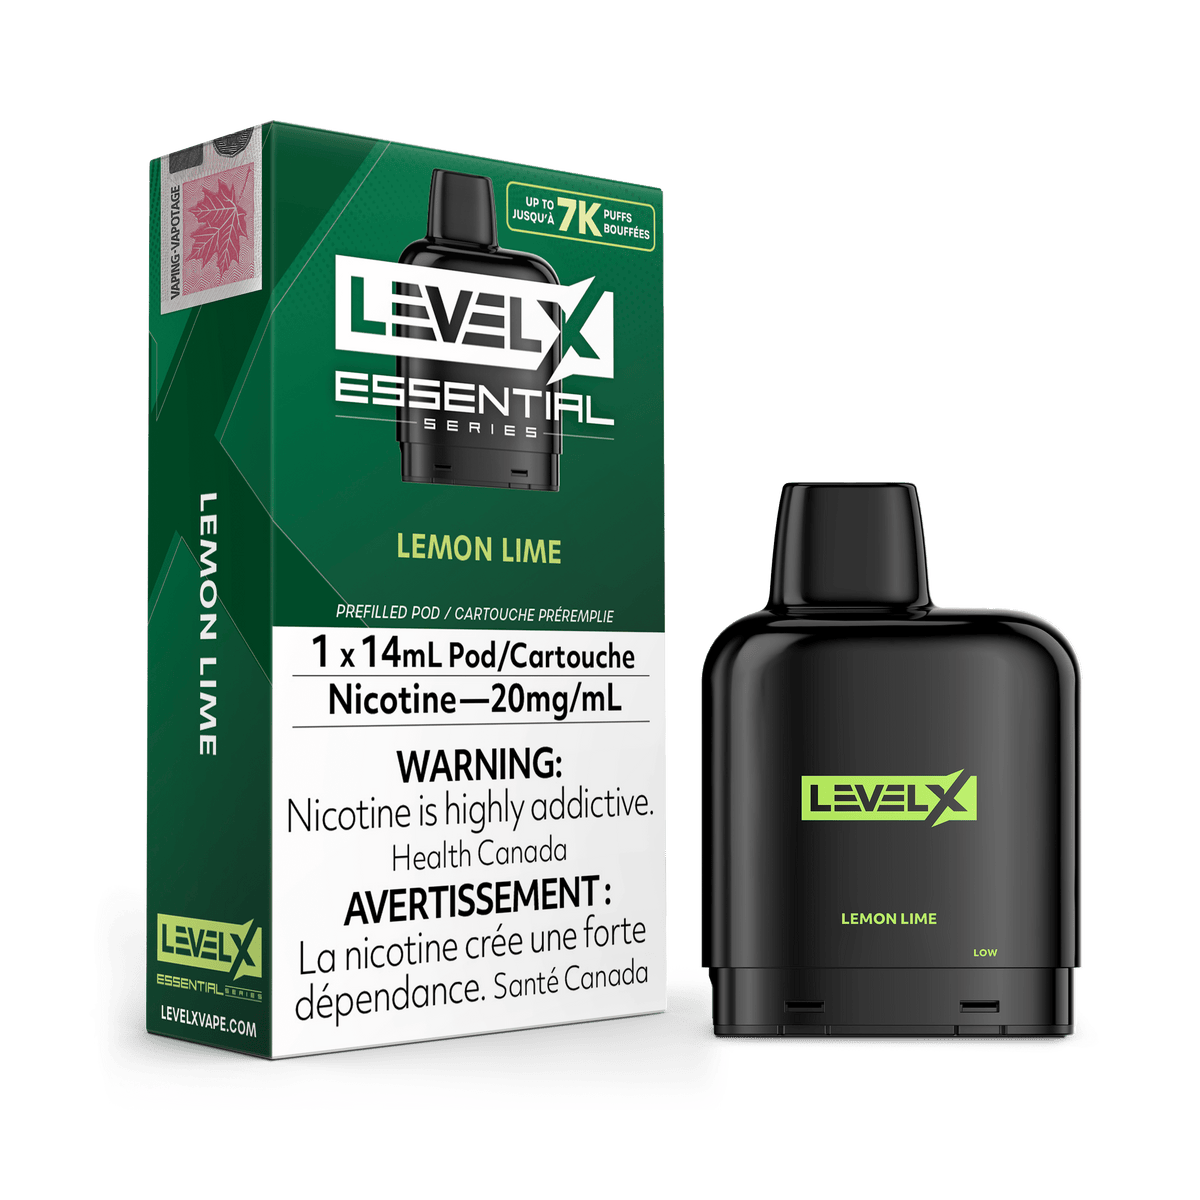 Level X Essential Series Pod - Lemon Lime available on Canada online vape shop